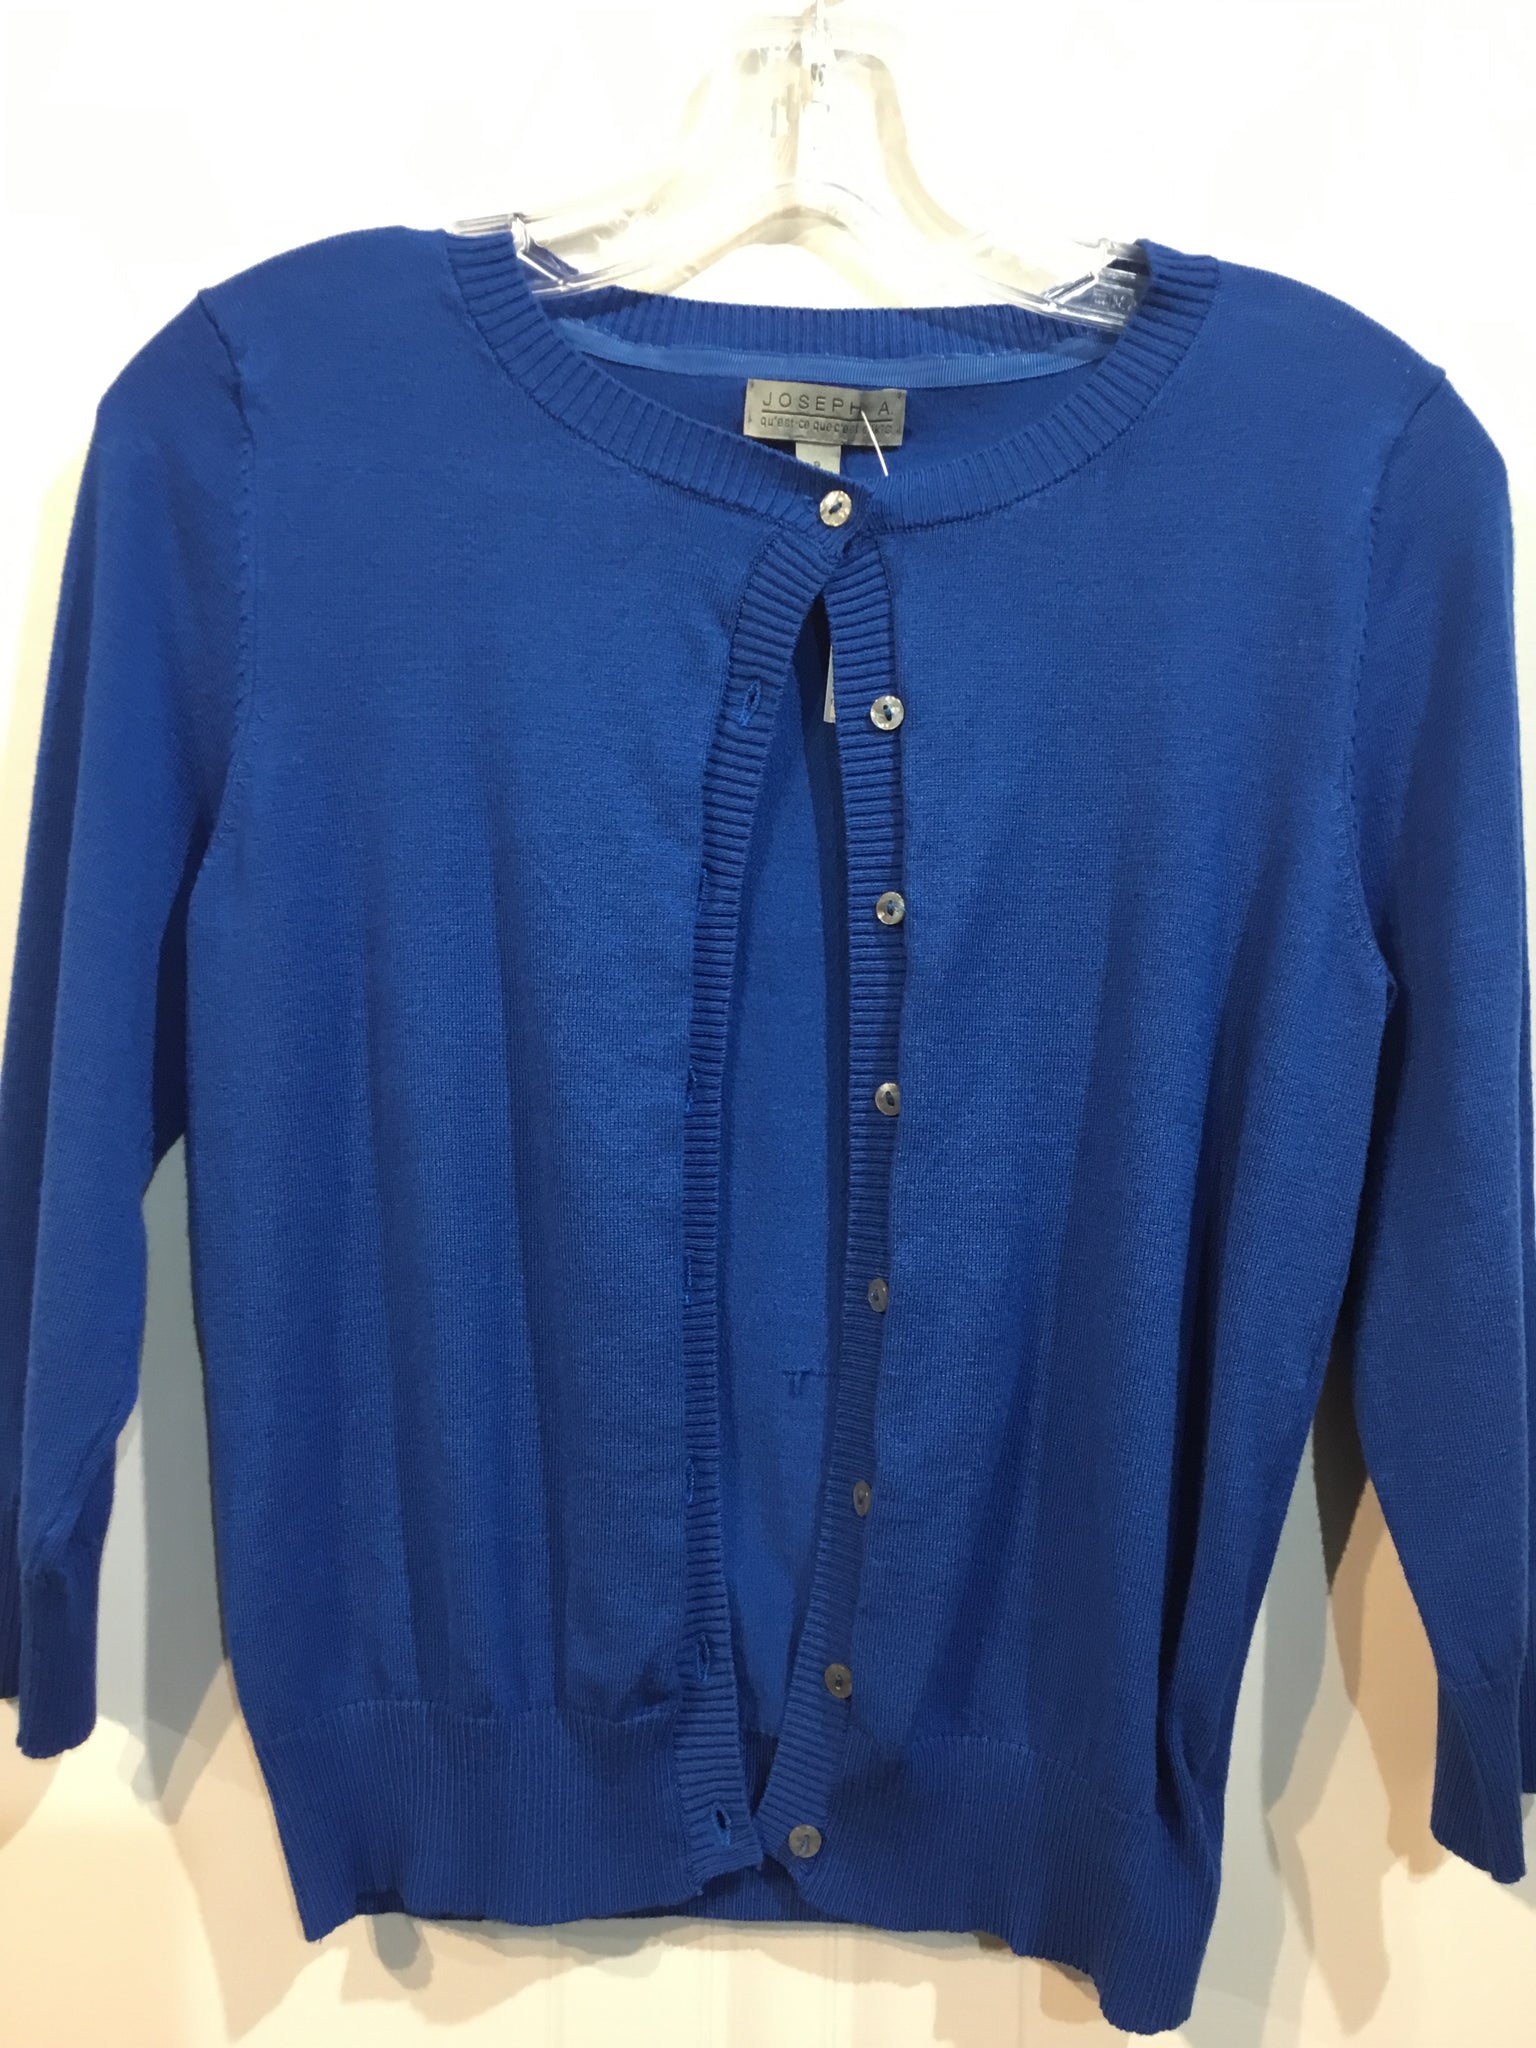 Joseph A. Size S/4-6 Blue Sweater